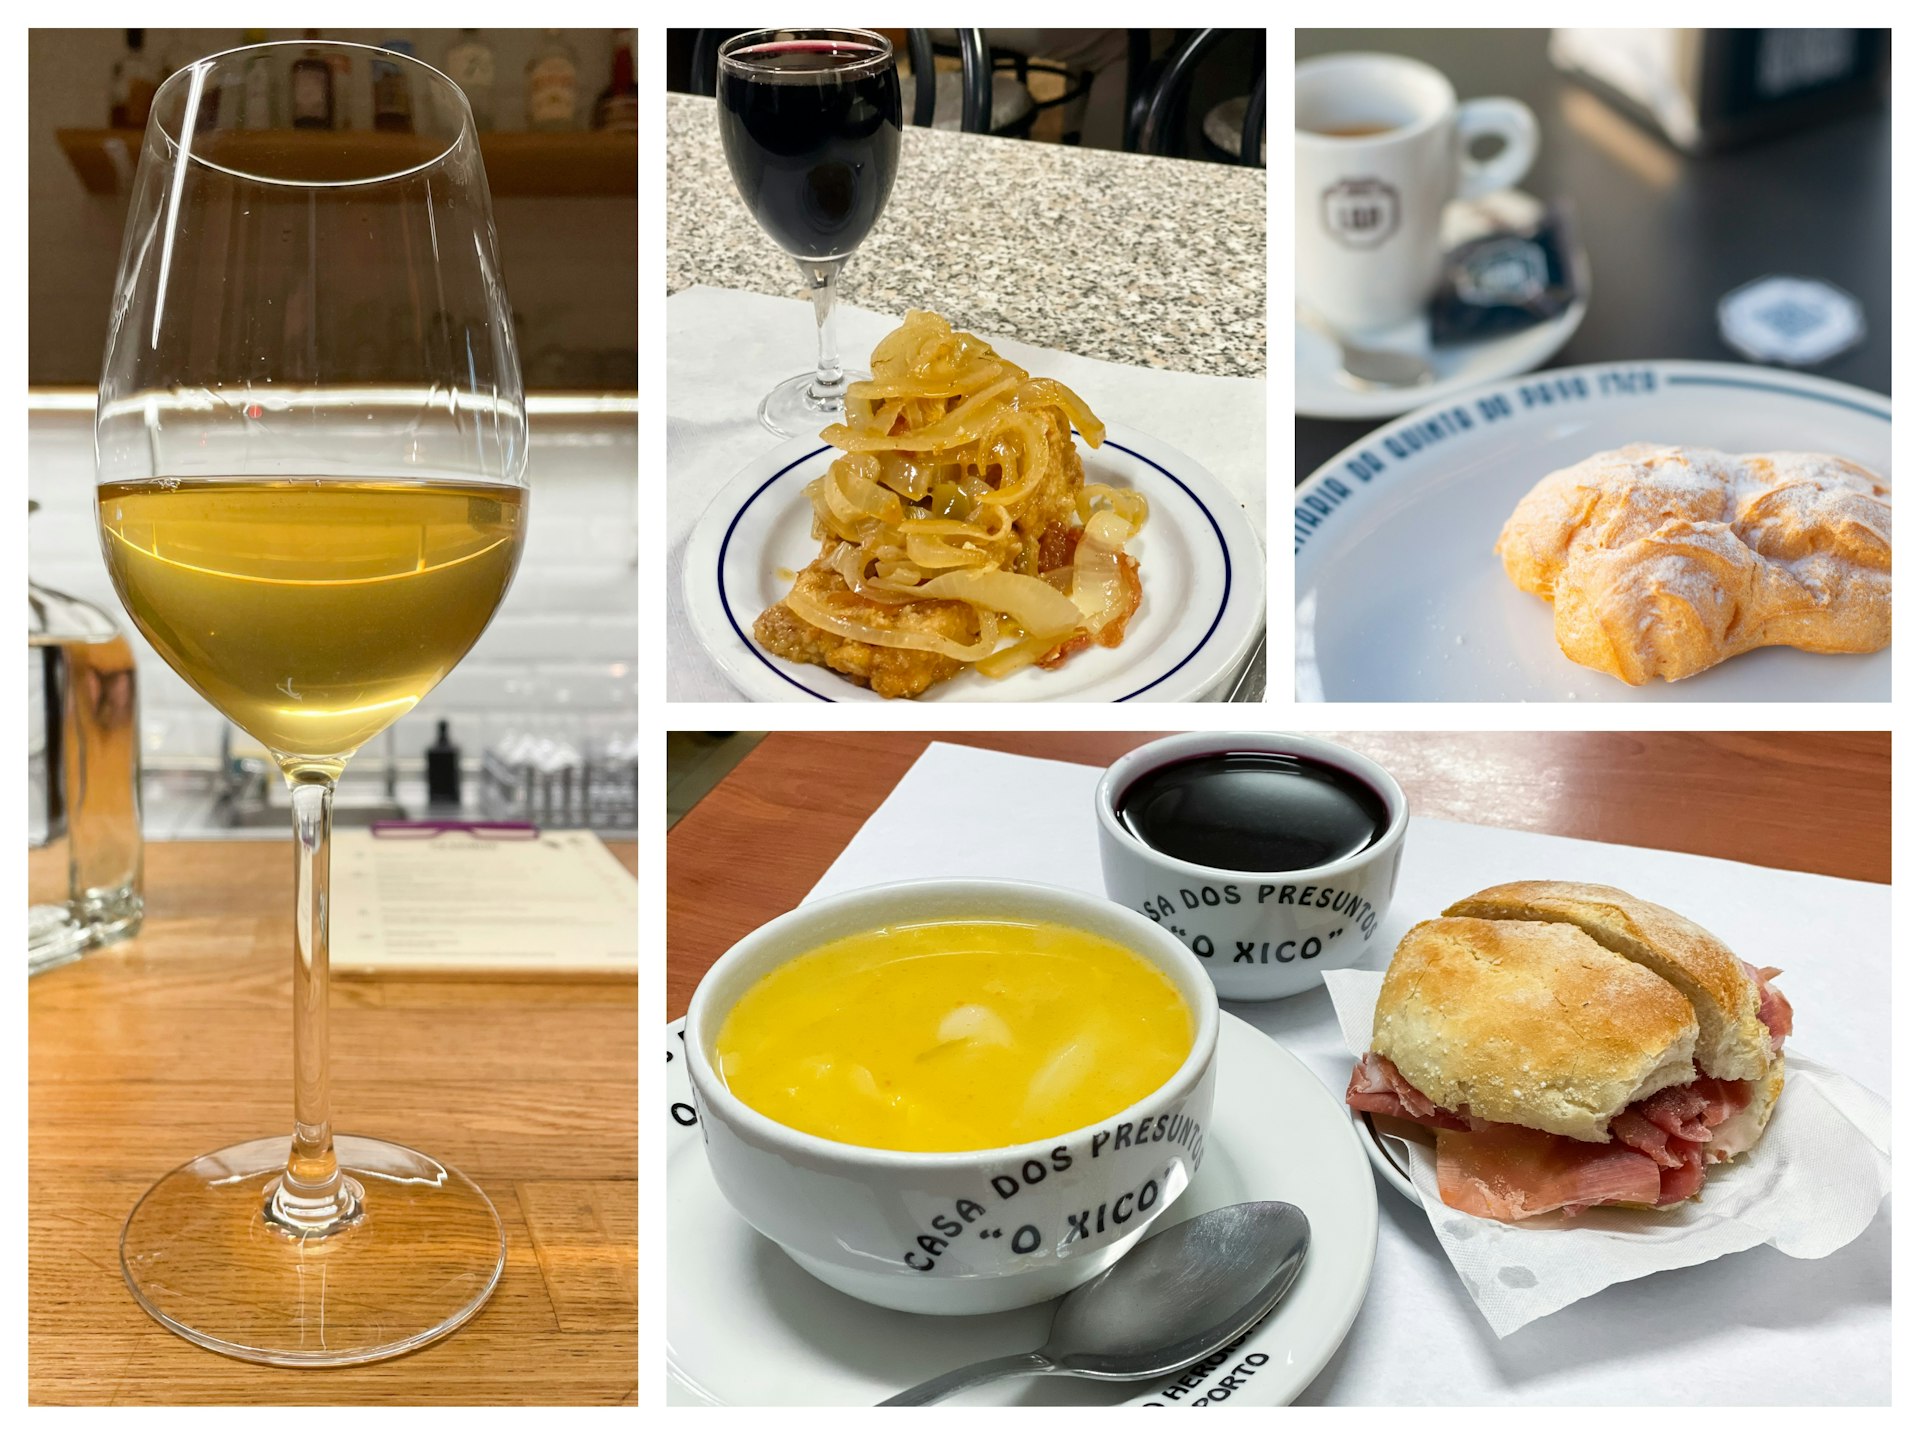 Wine, coffee, lunch and dessert in Porto